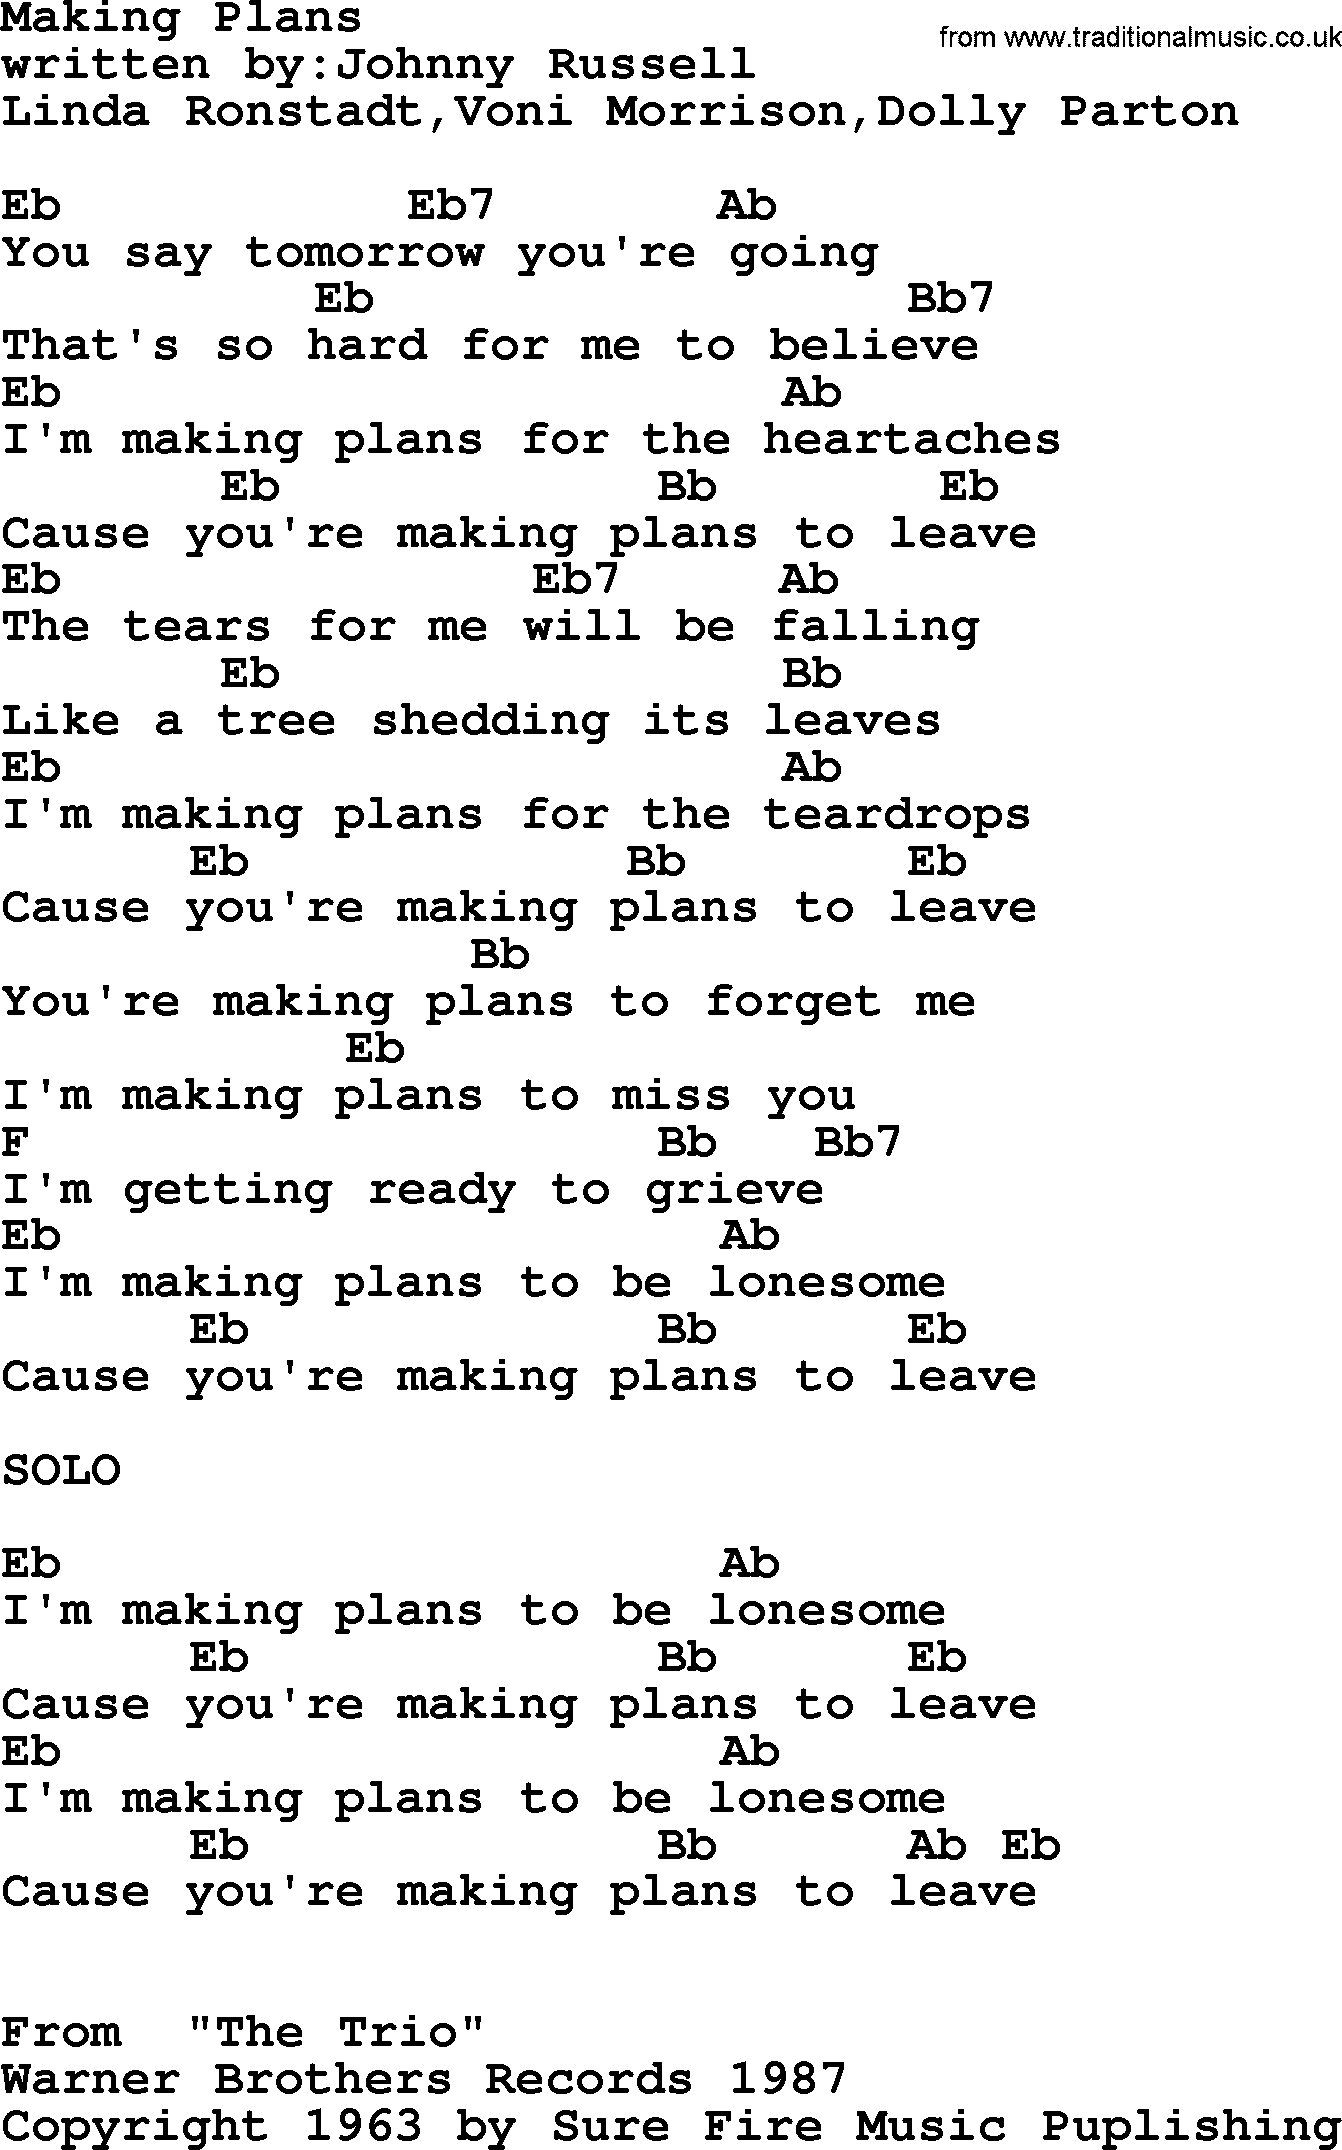 Emmylou Harris song: Making Plans lyrics and chords